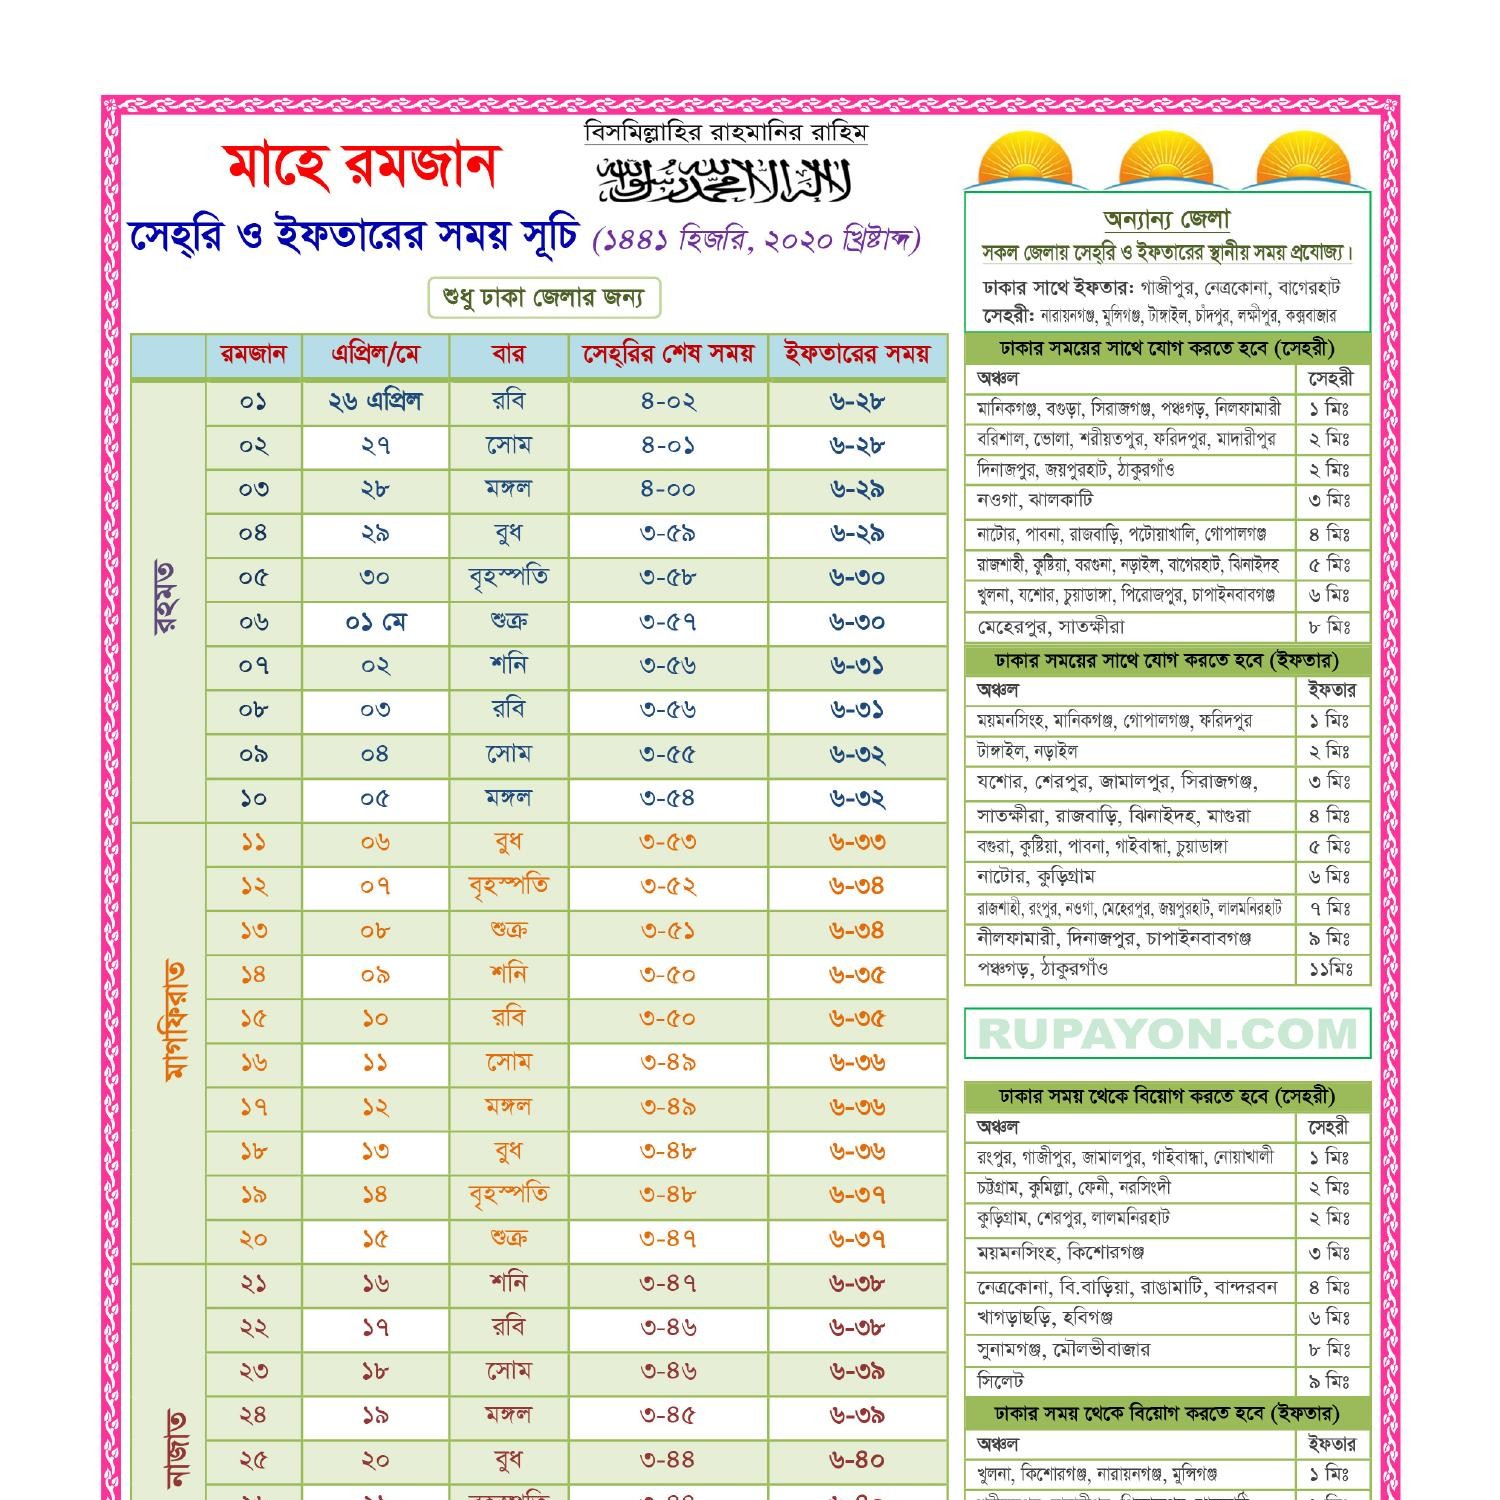 Ramadan-Calendar-Bangladesh-2020.pdf | DocDroid